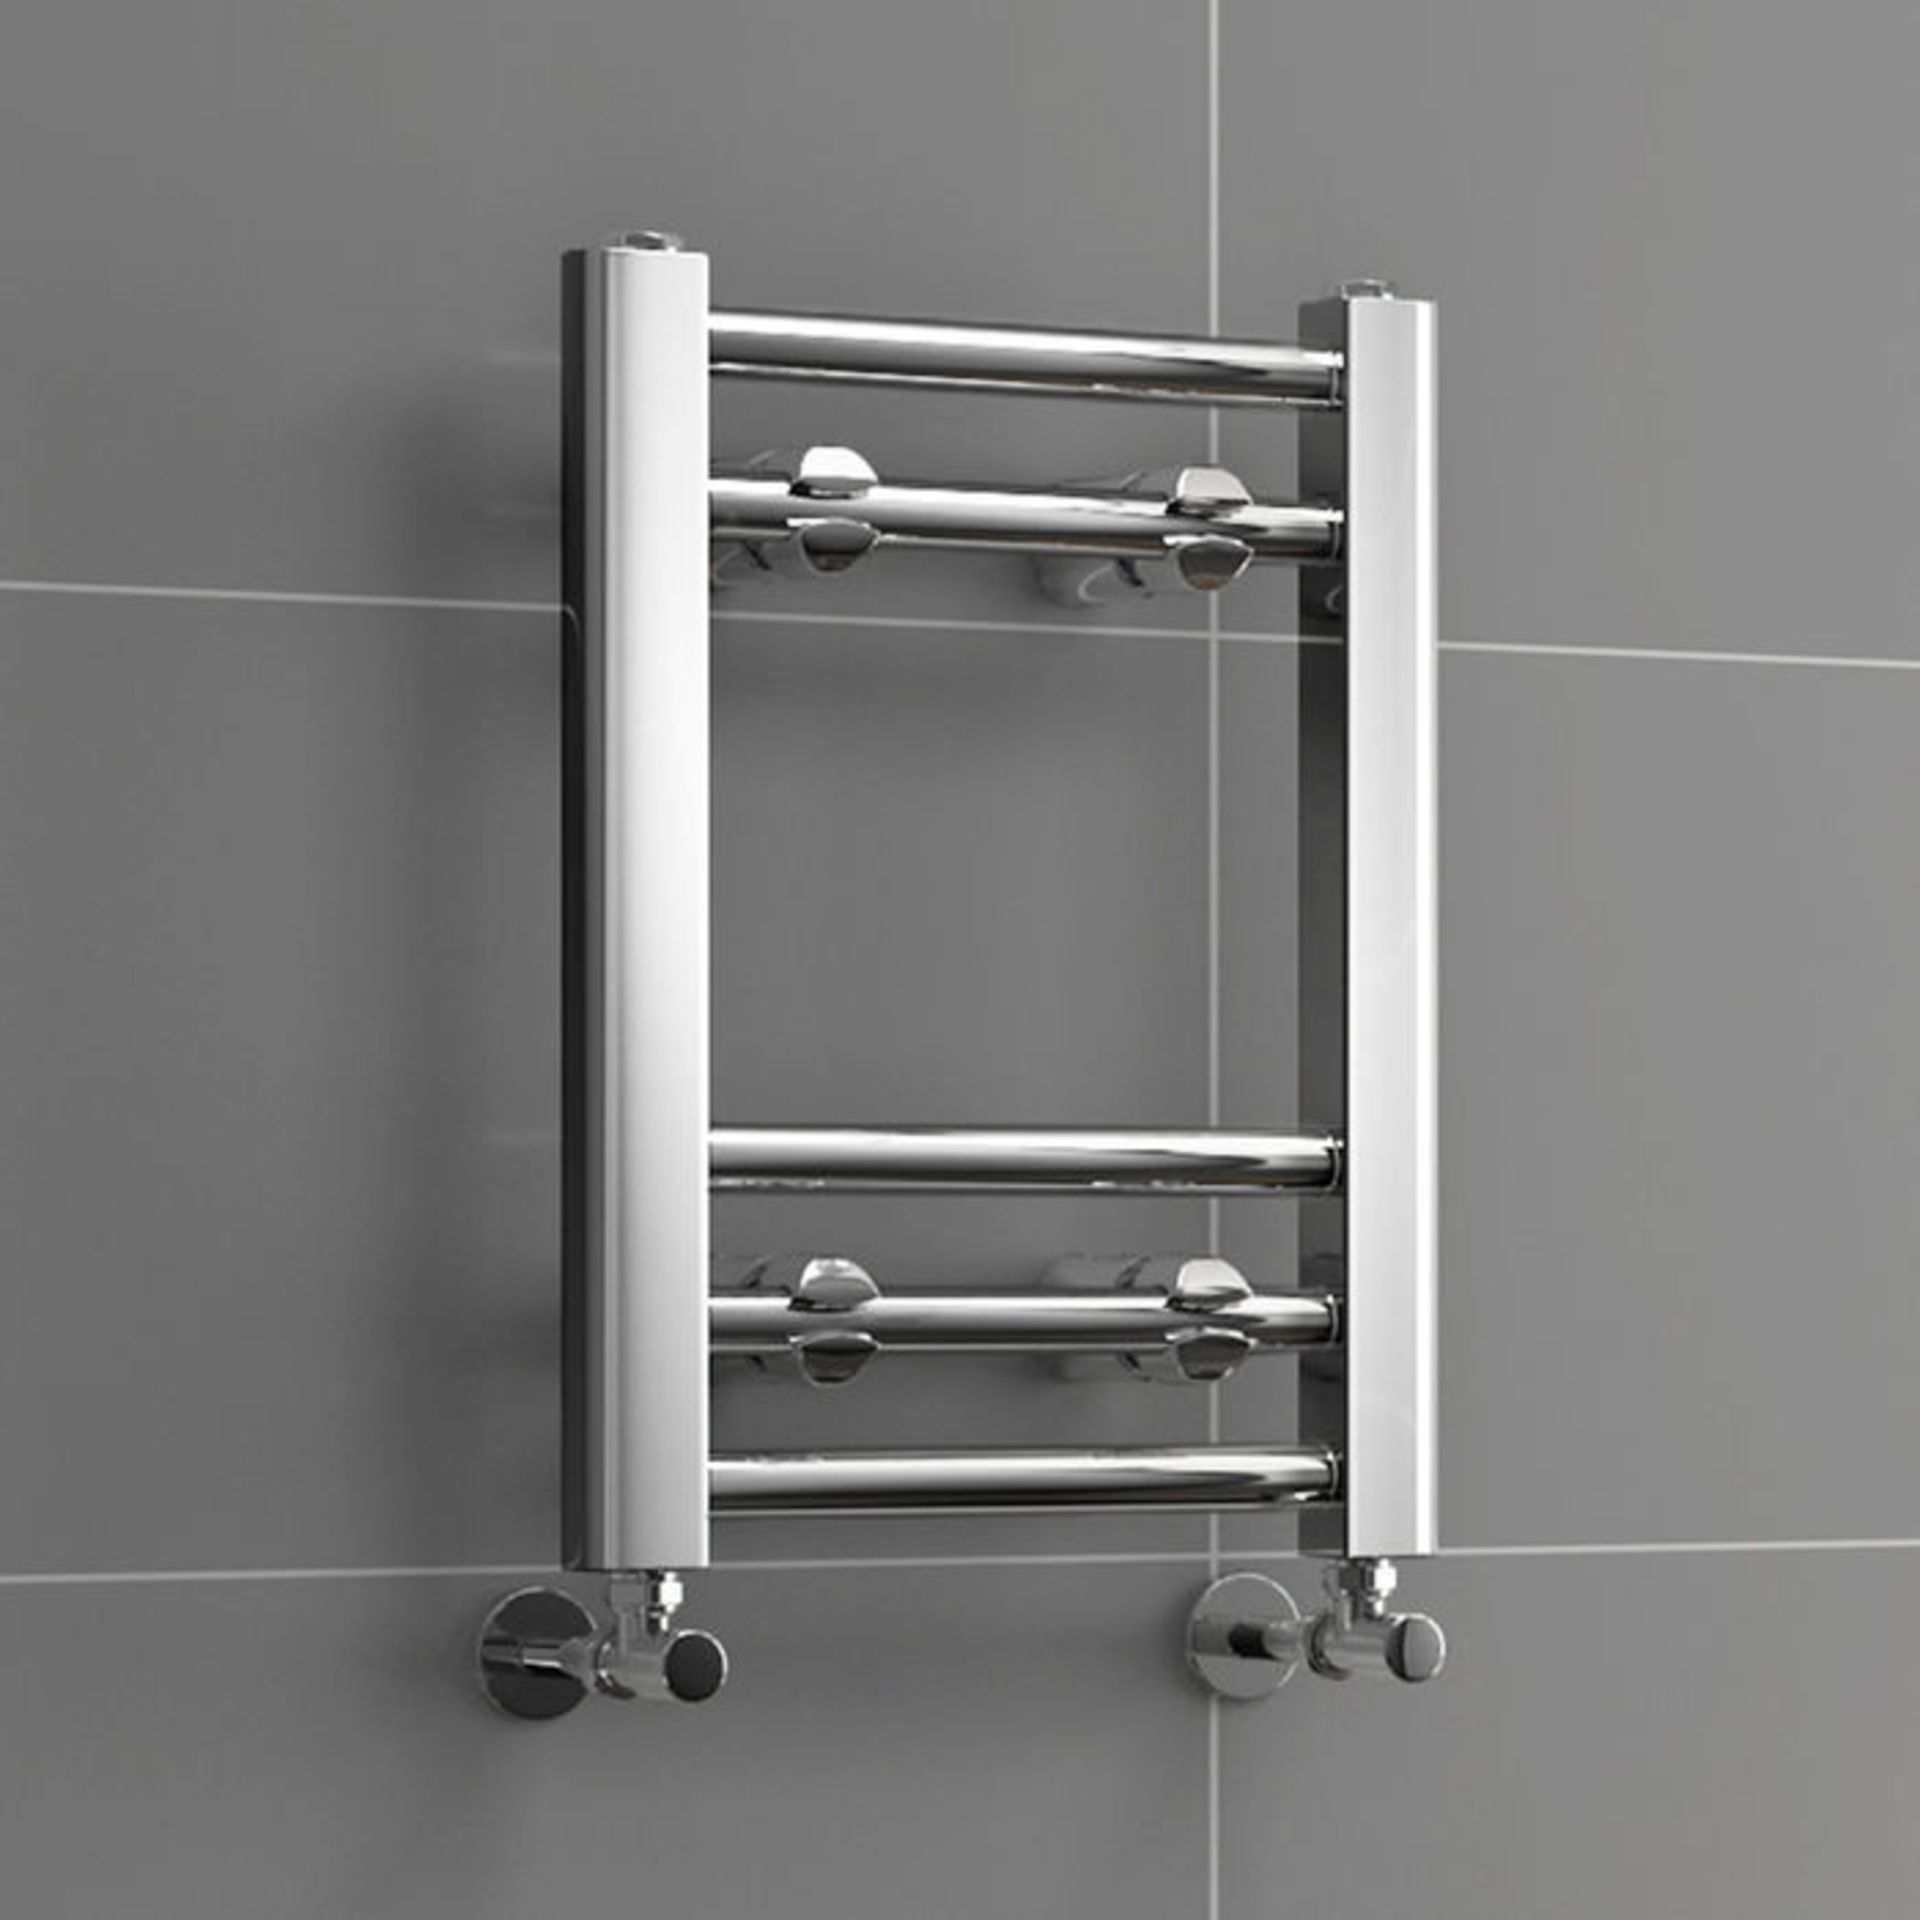 (P183) 400x300mm - 20mm Tubes - Chrome Heated Straight Rail Ladder Towel Rail. Low carbon steel